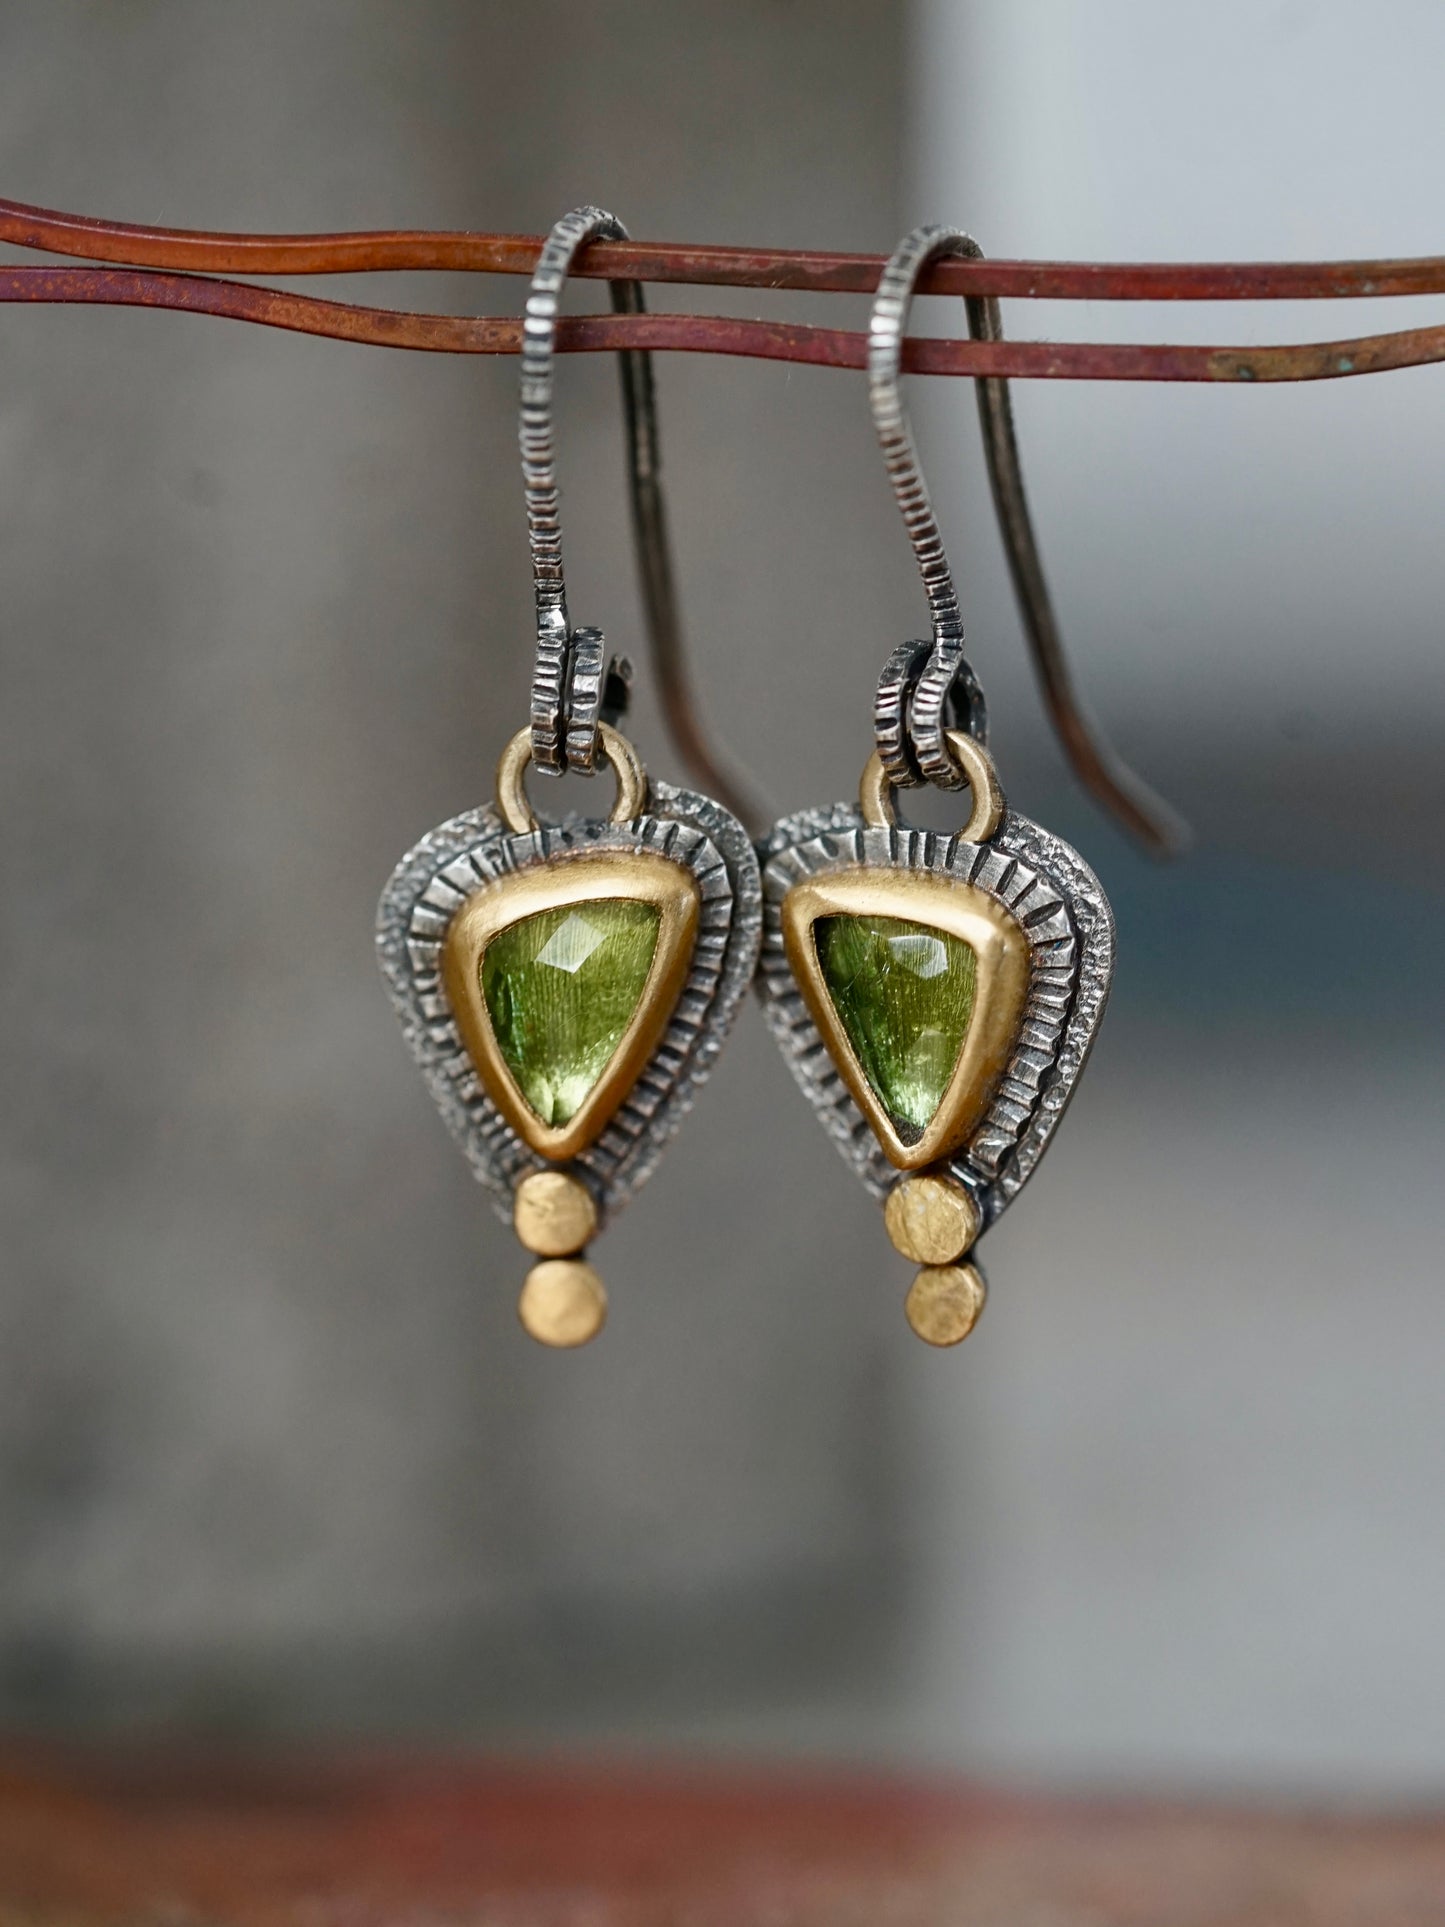 Green tourmaline drop earrings